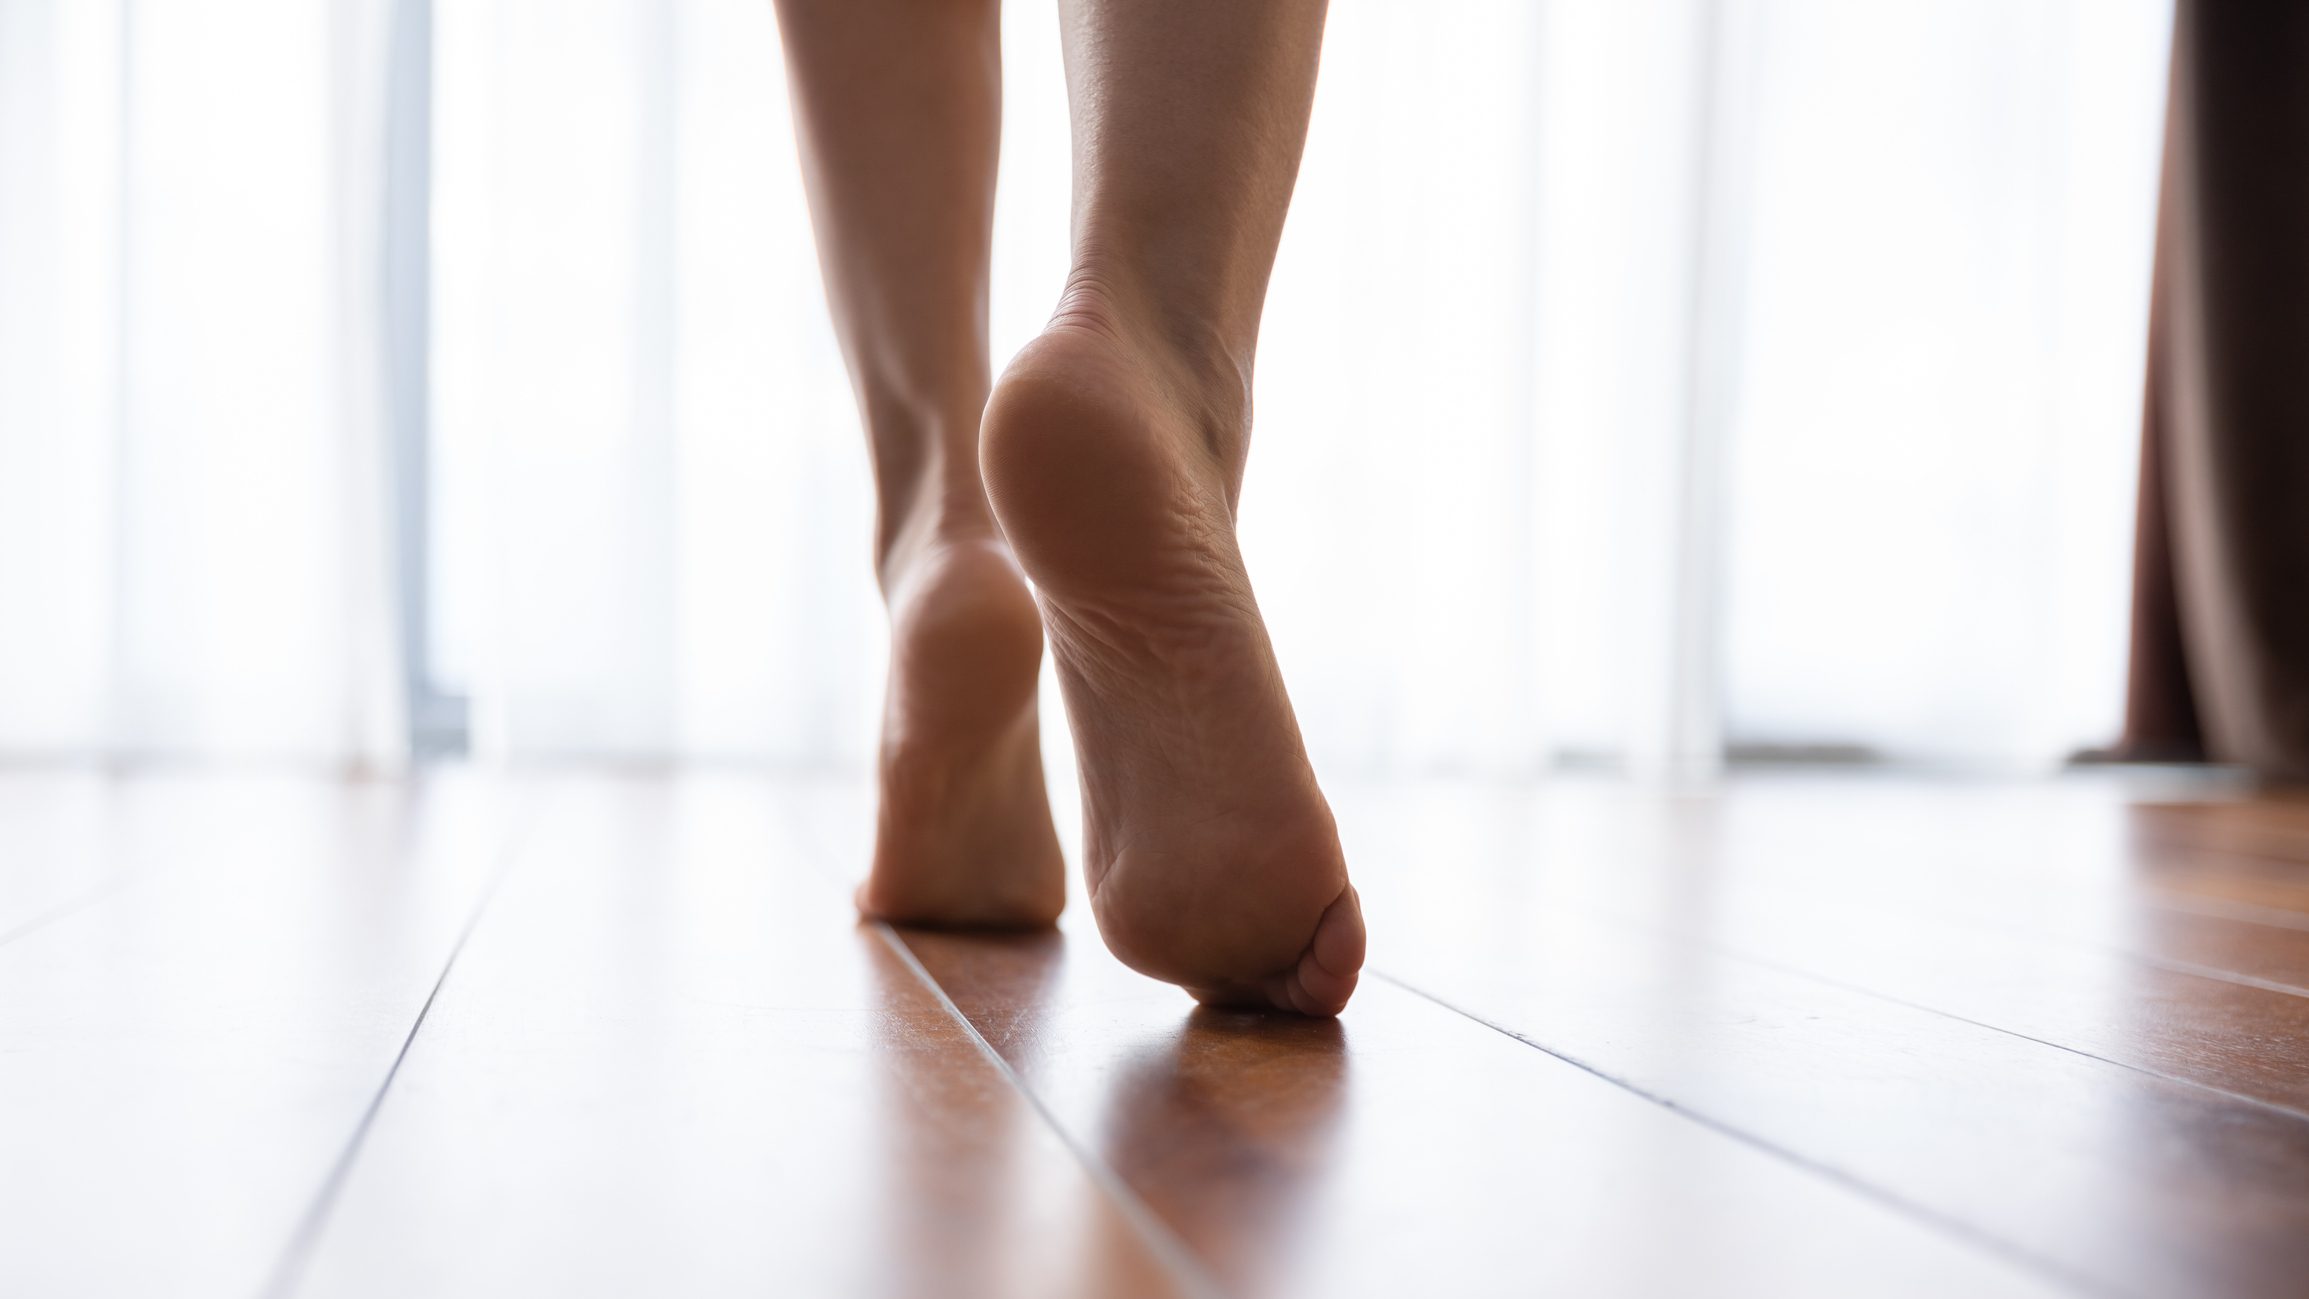 zblízka ženské nohy chůzi v domácnosti's feet walking in home